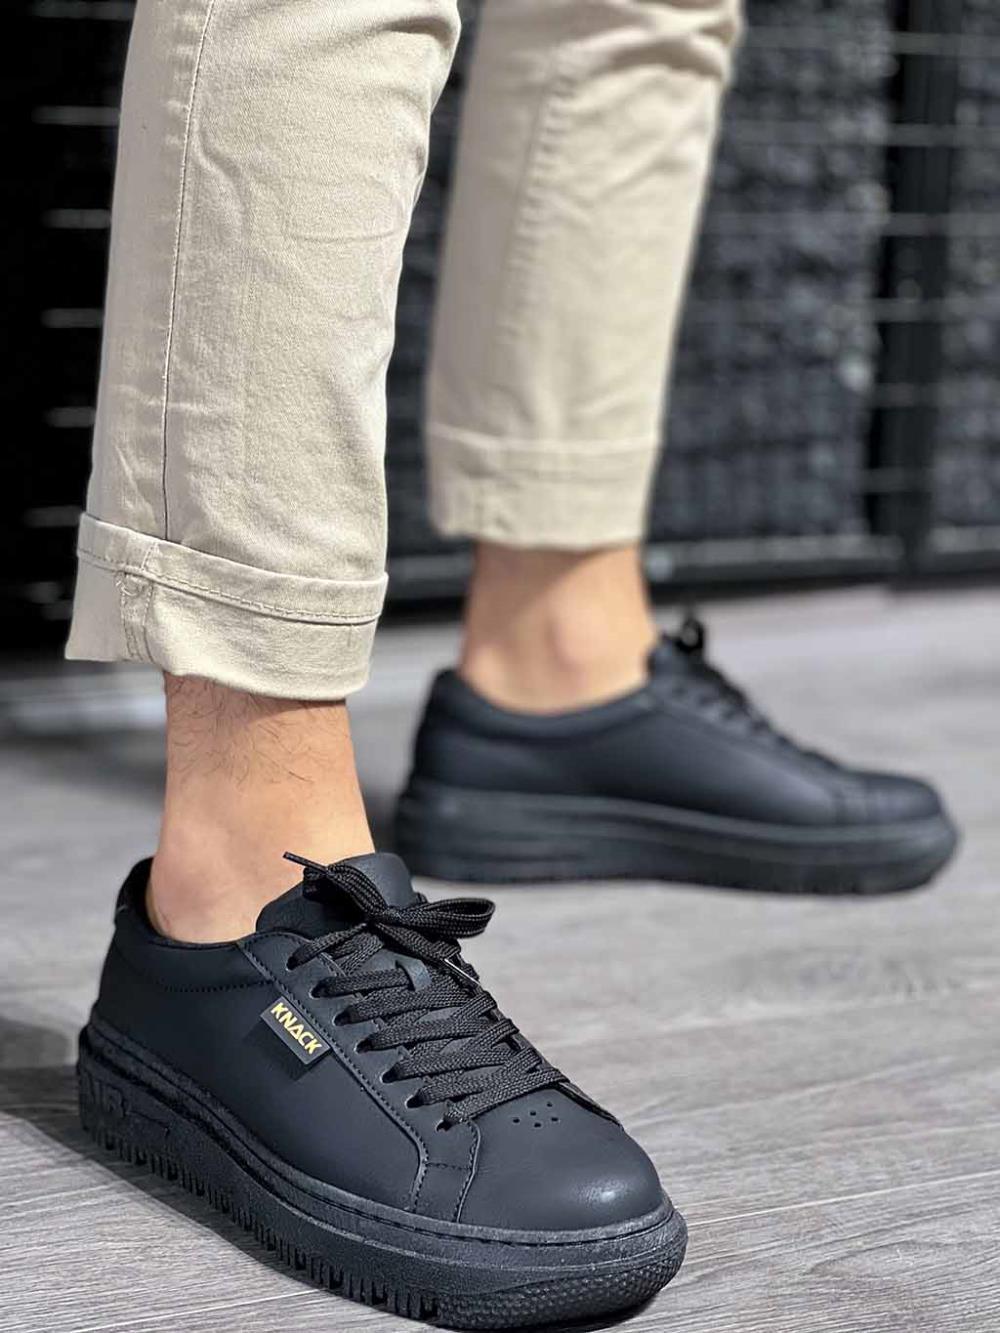 Men's Casual Shoes sneakers 225 Black (Black Sole) - STREET MODE ™